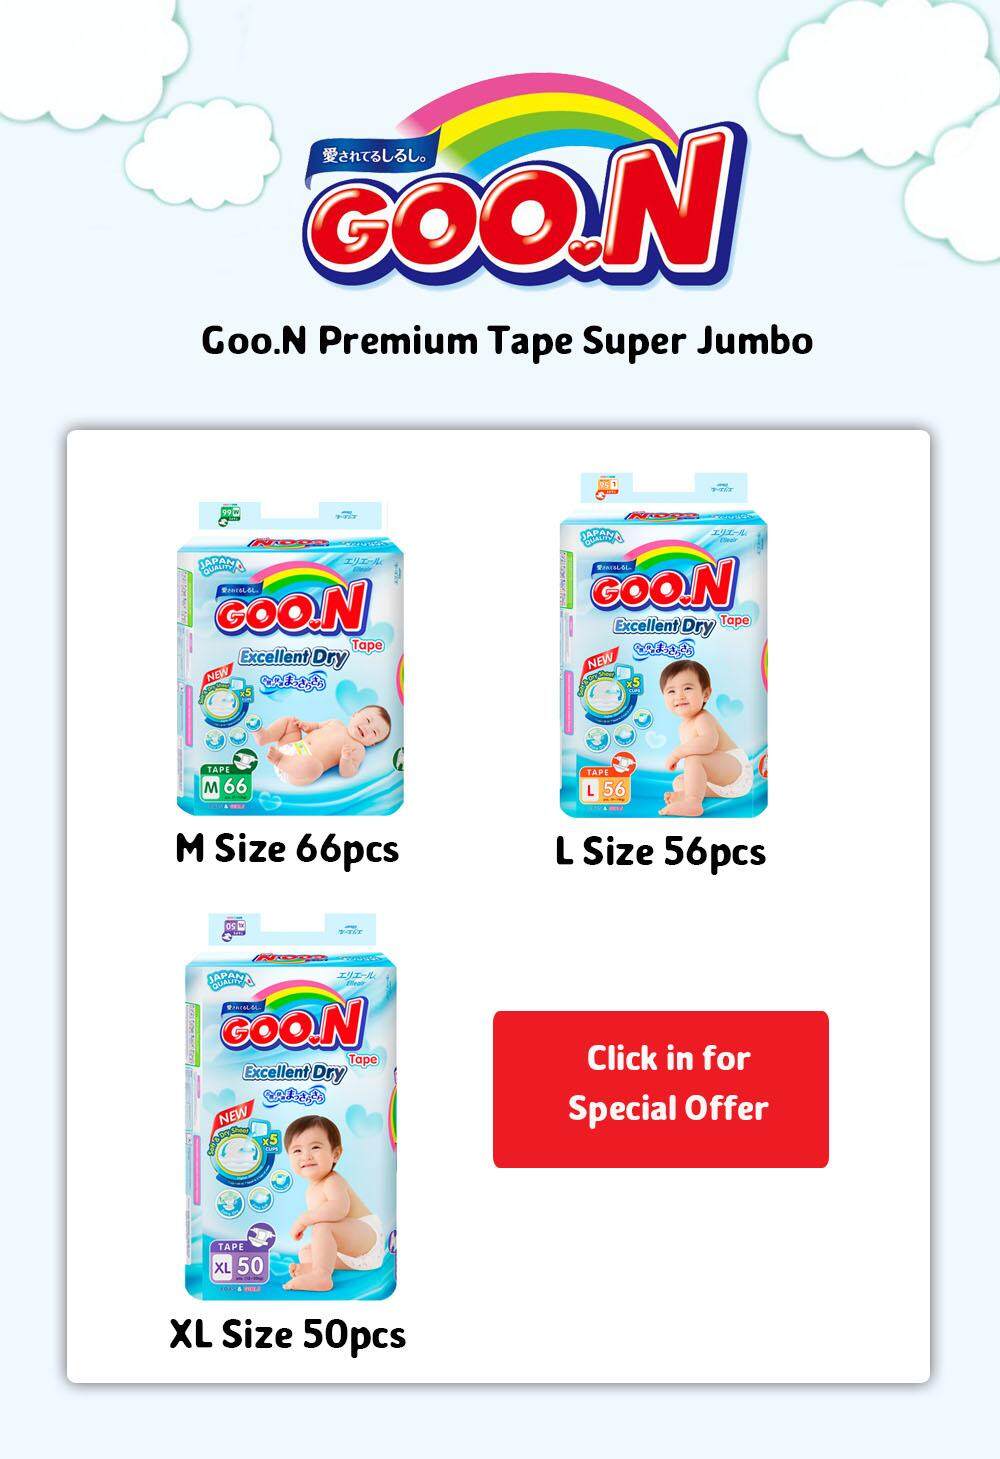 GooN Premium Tape Super Jumbo Product Description 1.jpg